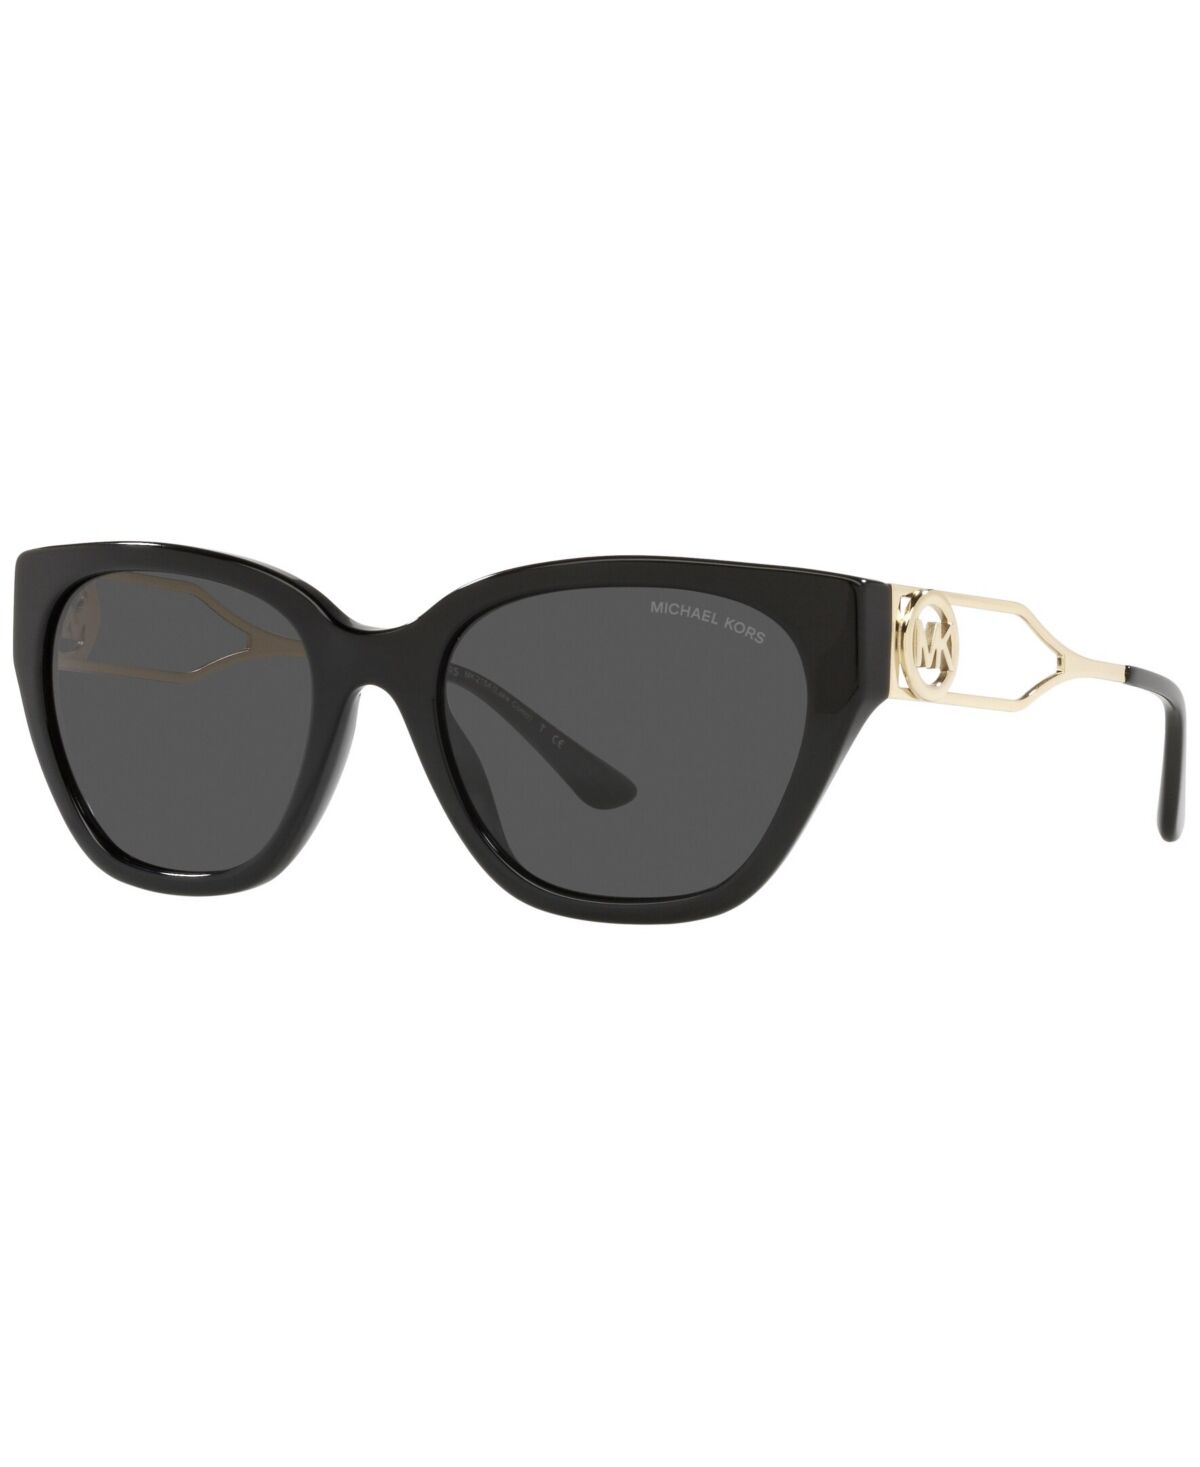 Michael Kors Women's Sunglasses, MK2154 Lake Como 54 - Black